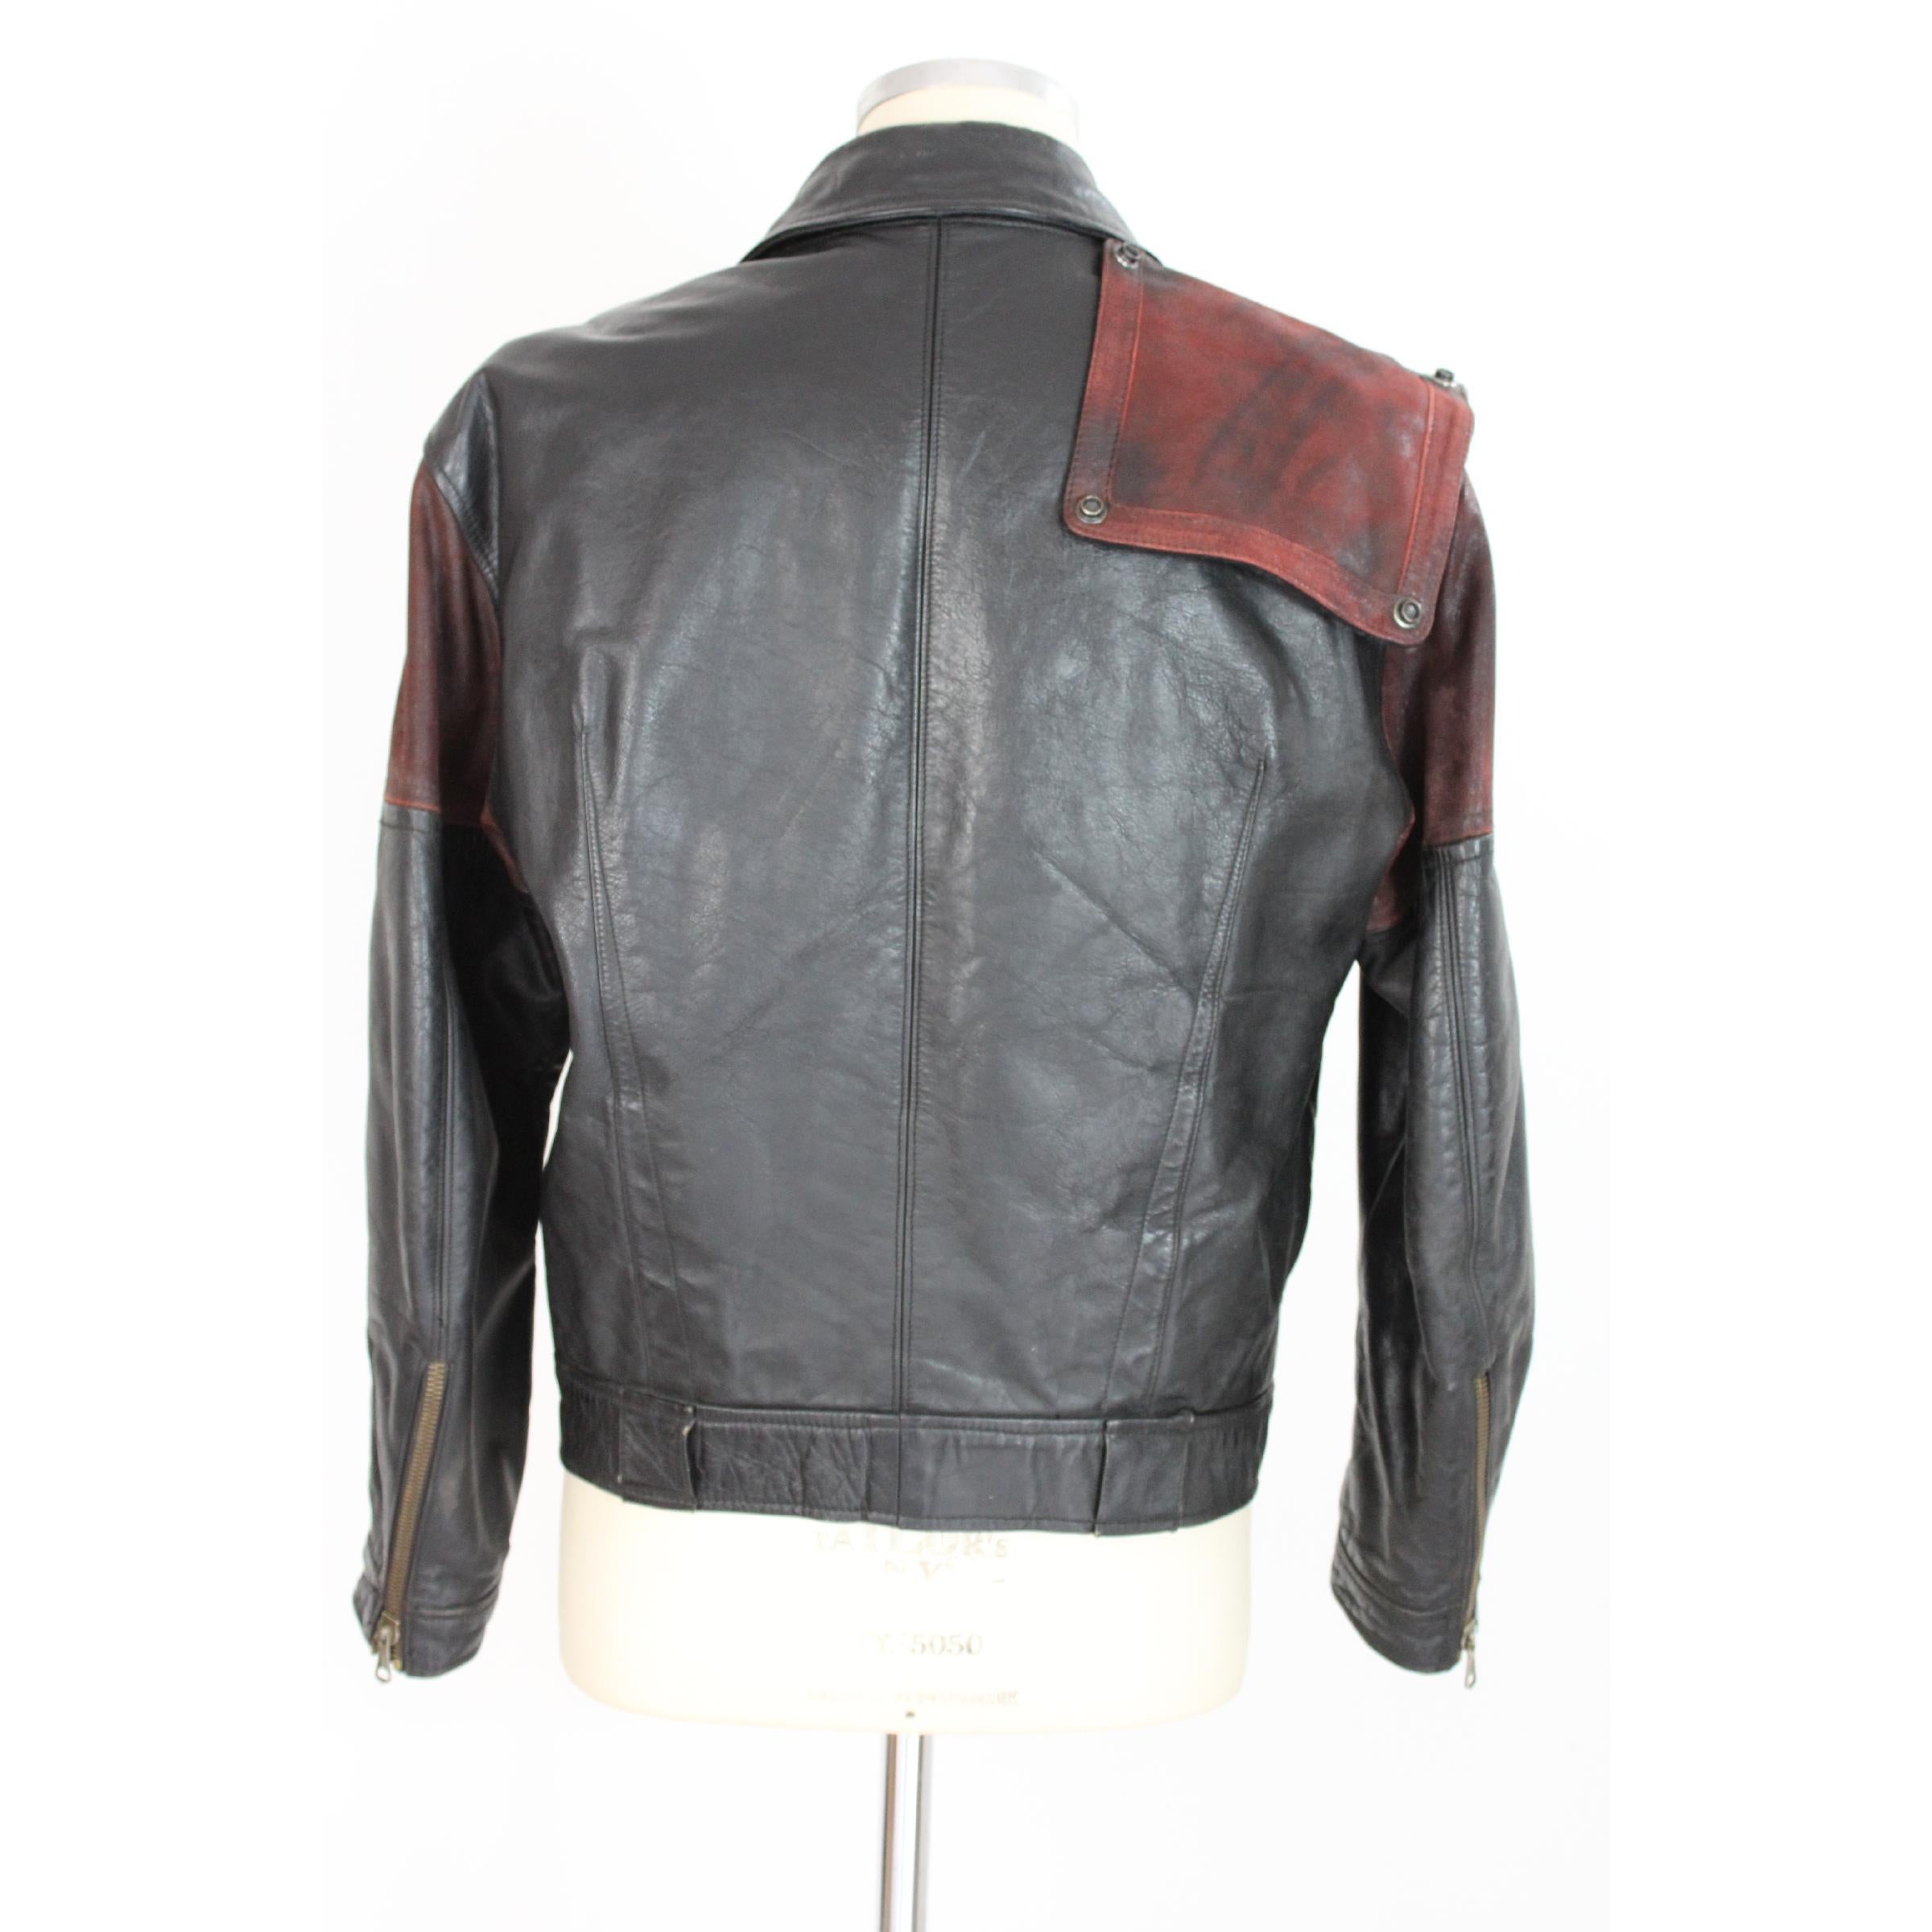 Giorgio Armani Biker Leather Vintage Jacket Black Chiodo, 1980s